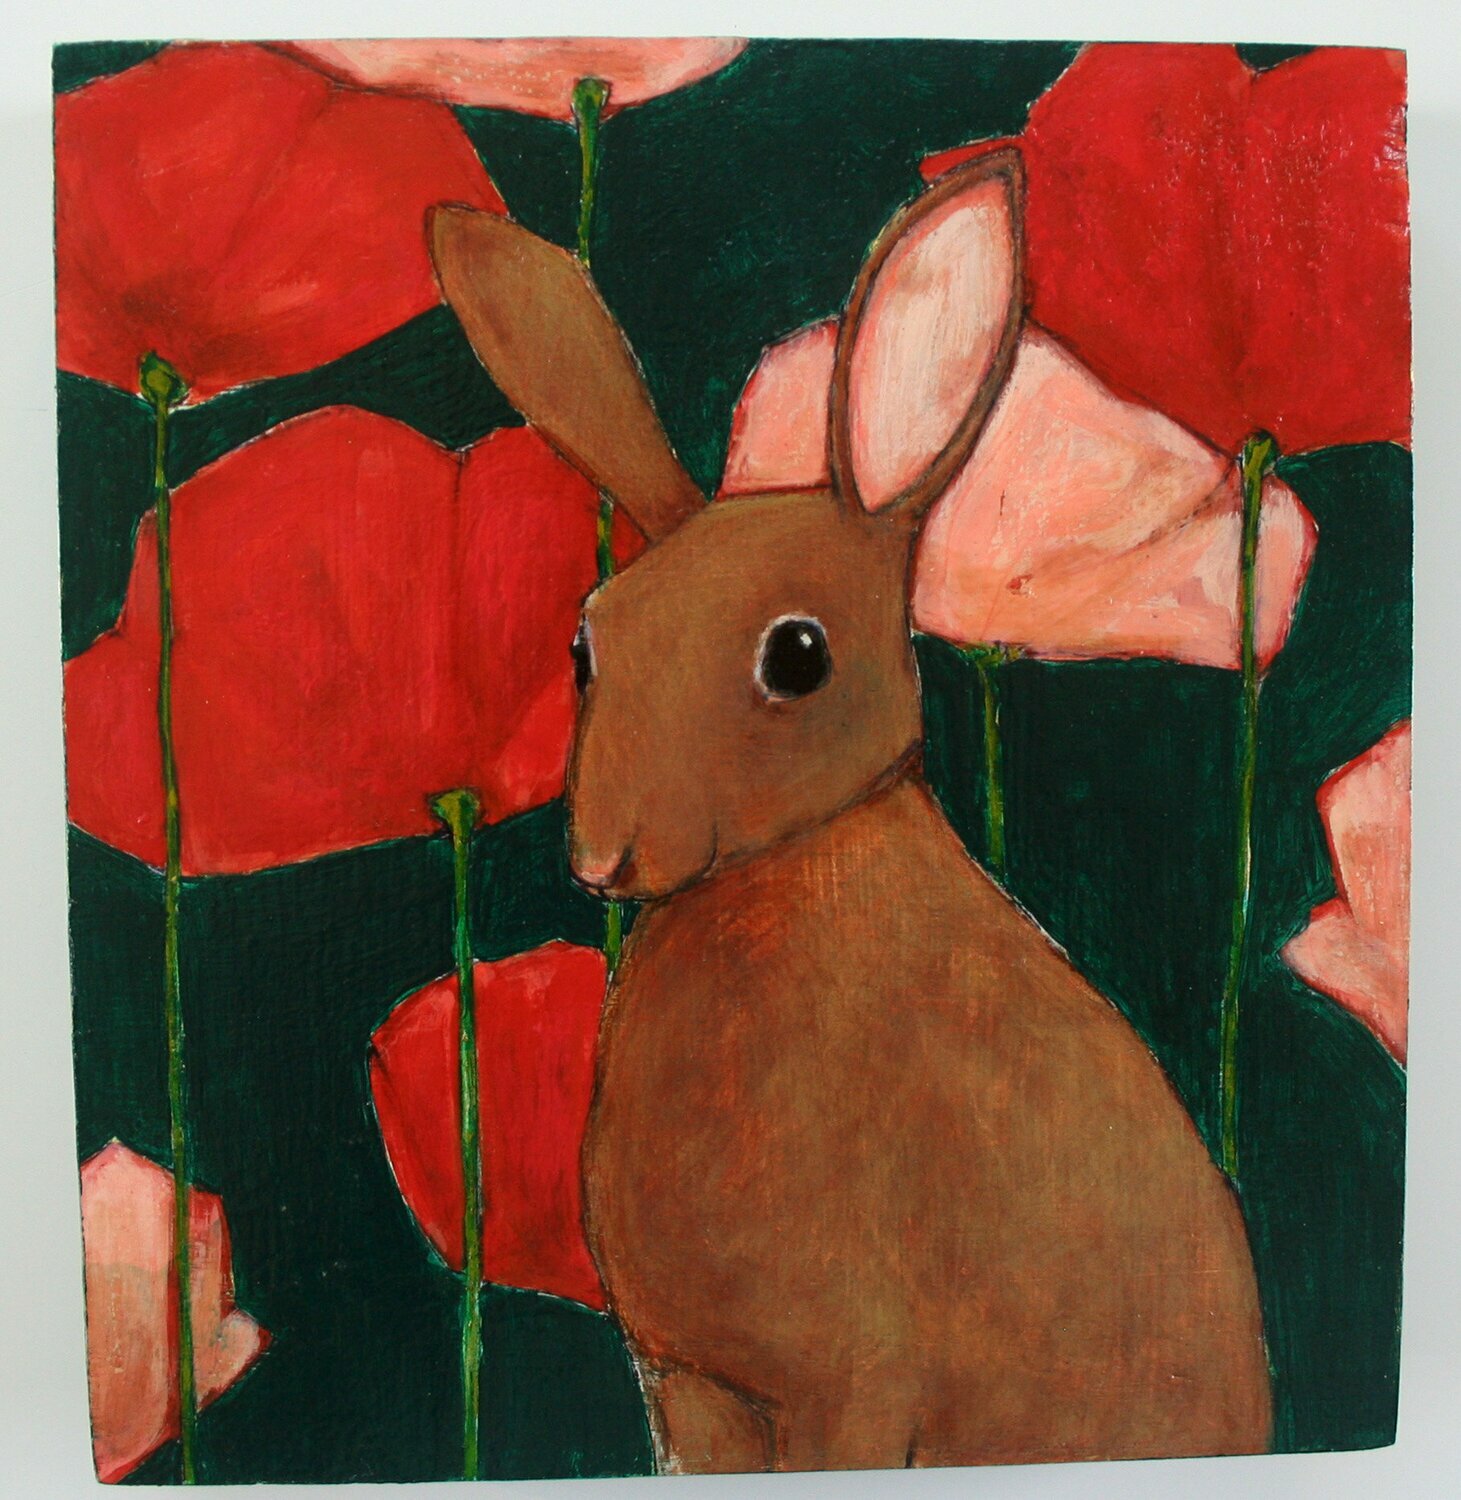 bunny rabbit in flowers painting original a2n2koon wall art on reclaimed wood rabbit in poppies textural artwork on wood red pink brown teal